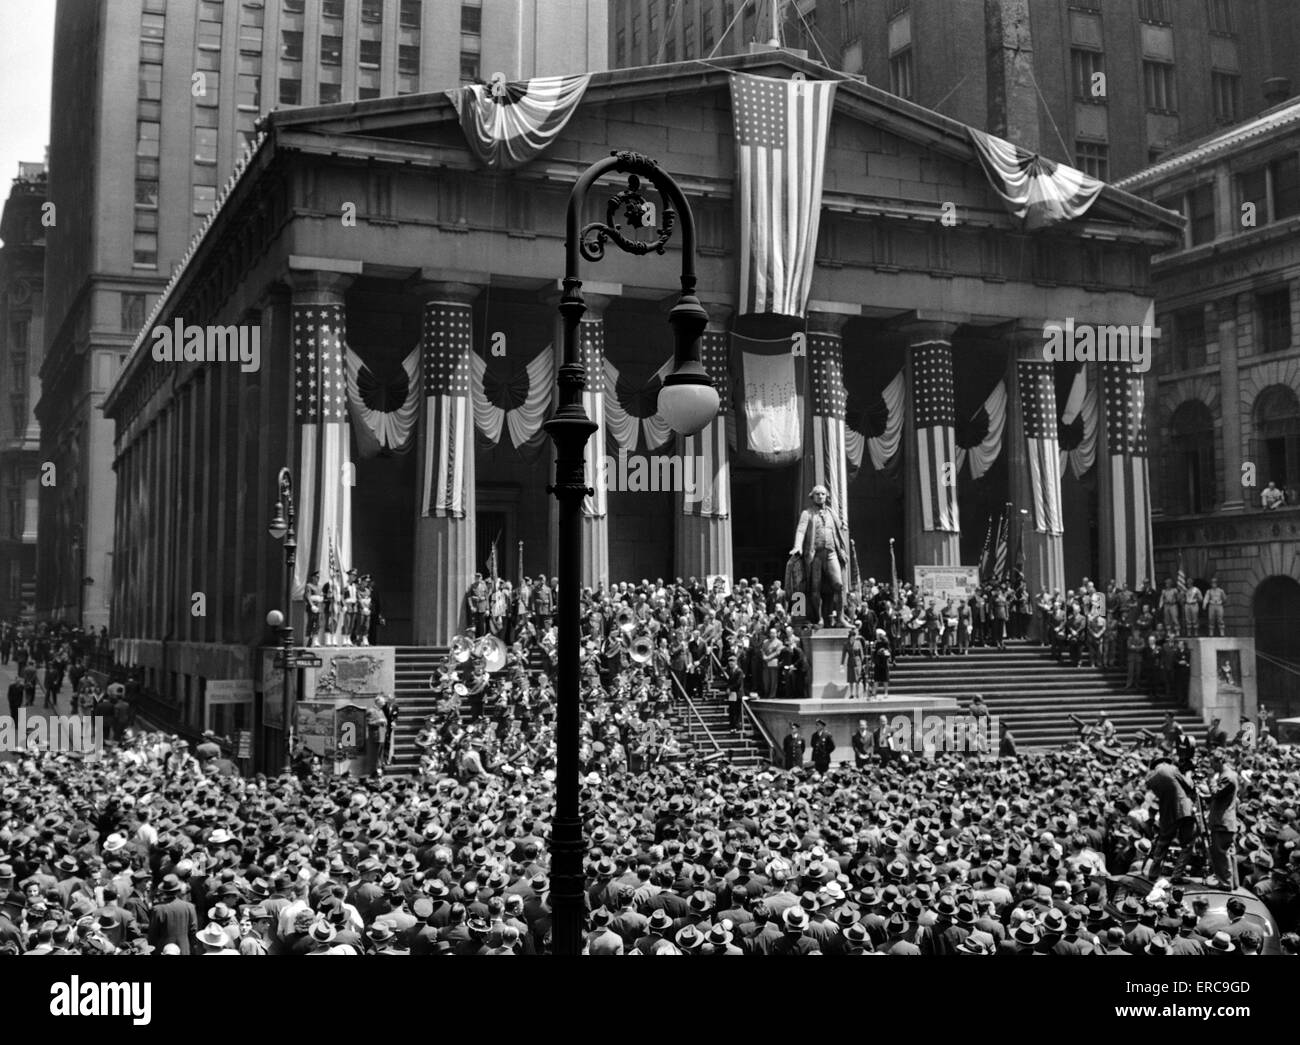 1942 WWII KRIEG BOND RALLYE FEDERAL TREASURY BUILDING NEW YORK BÖRSE WALL STREET MANHATTAN NEW YORK CITY USA Stockfoto